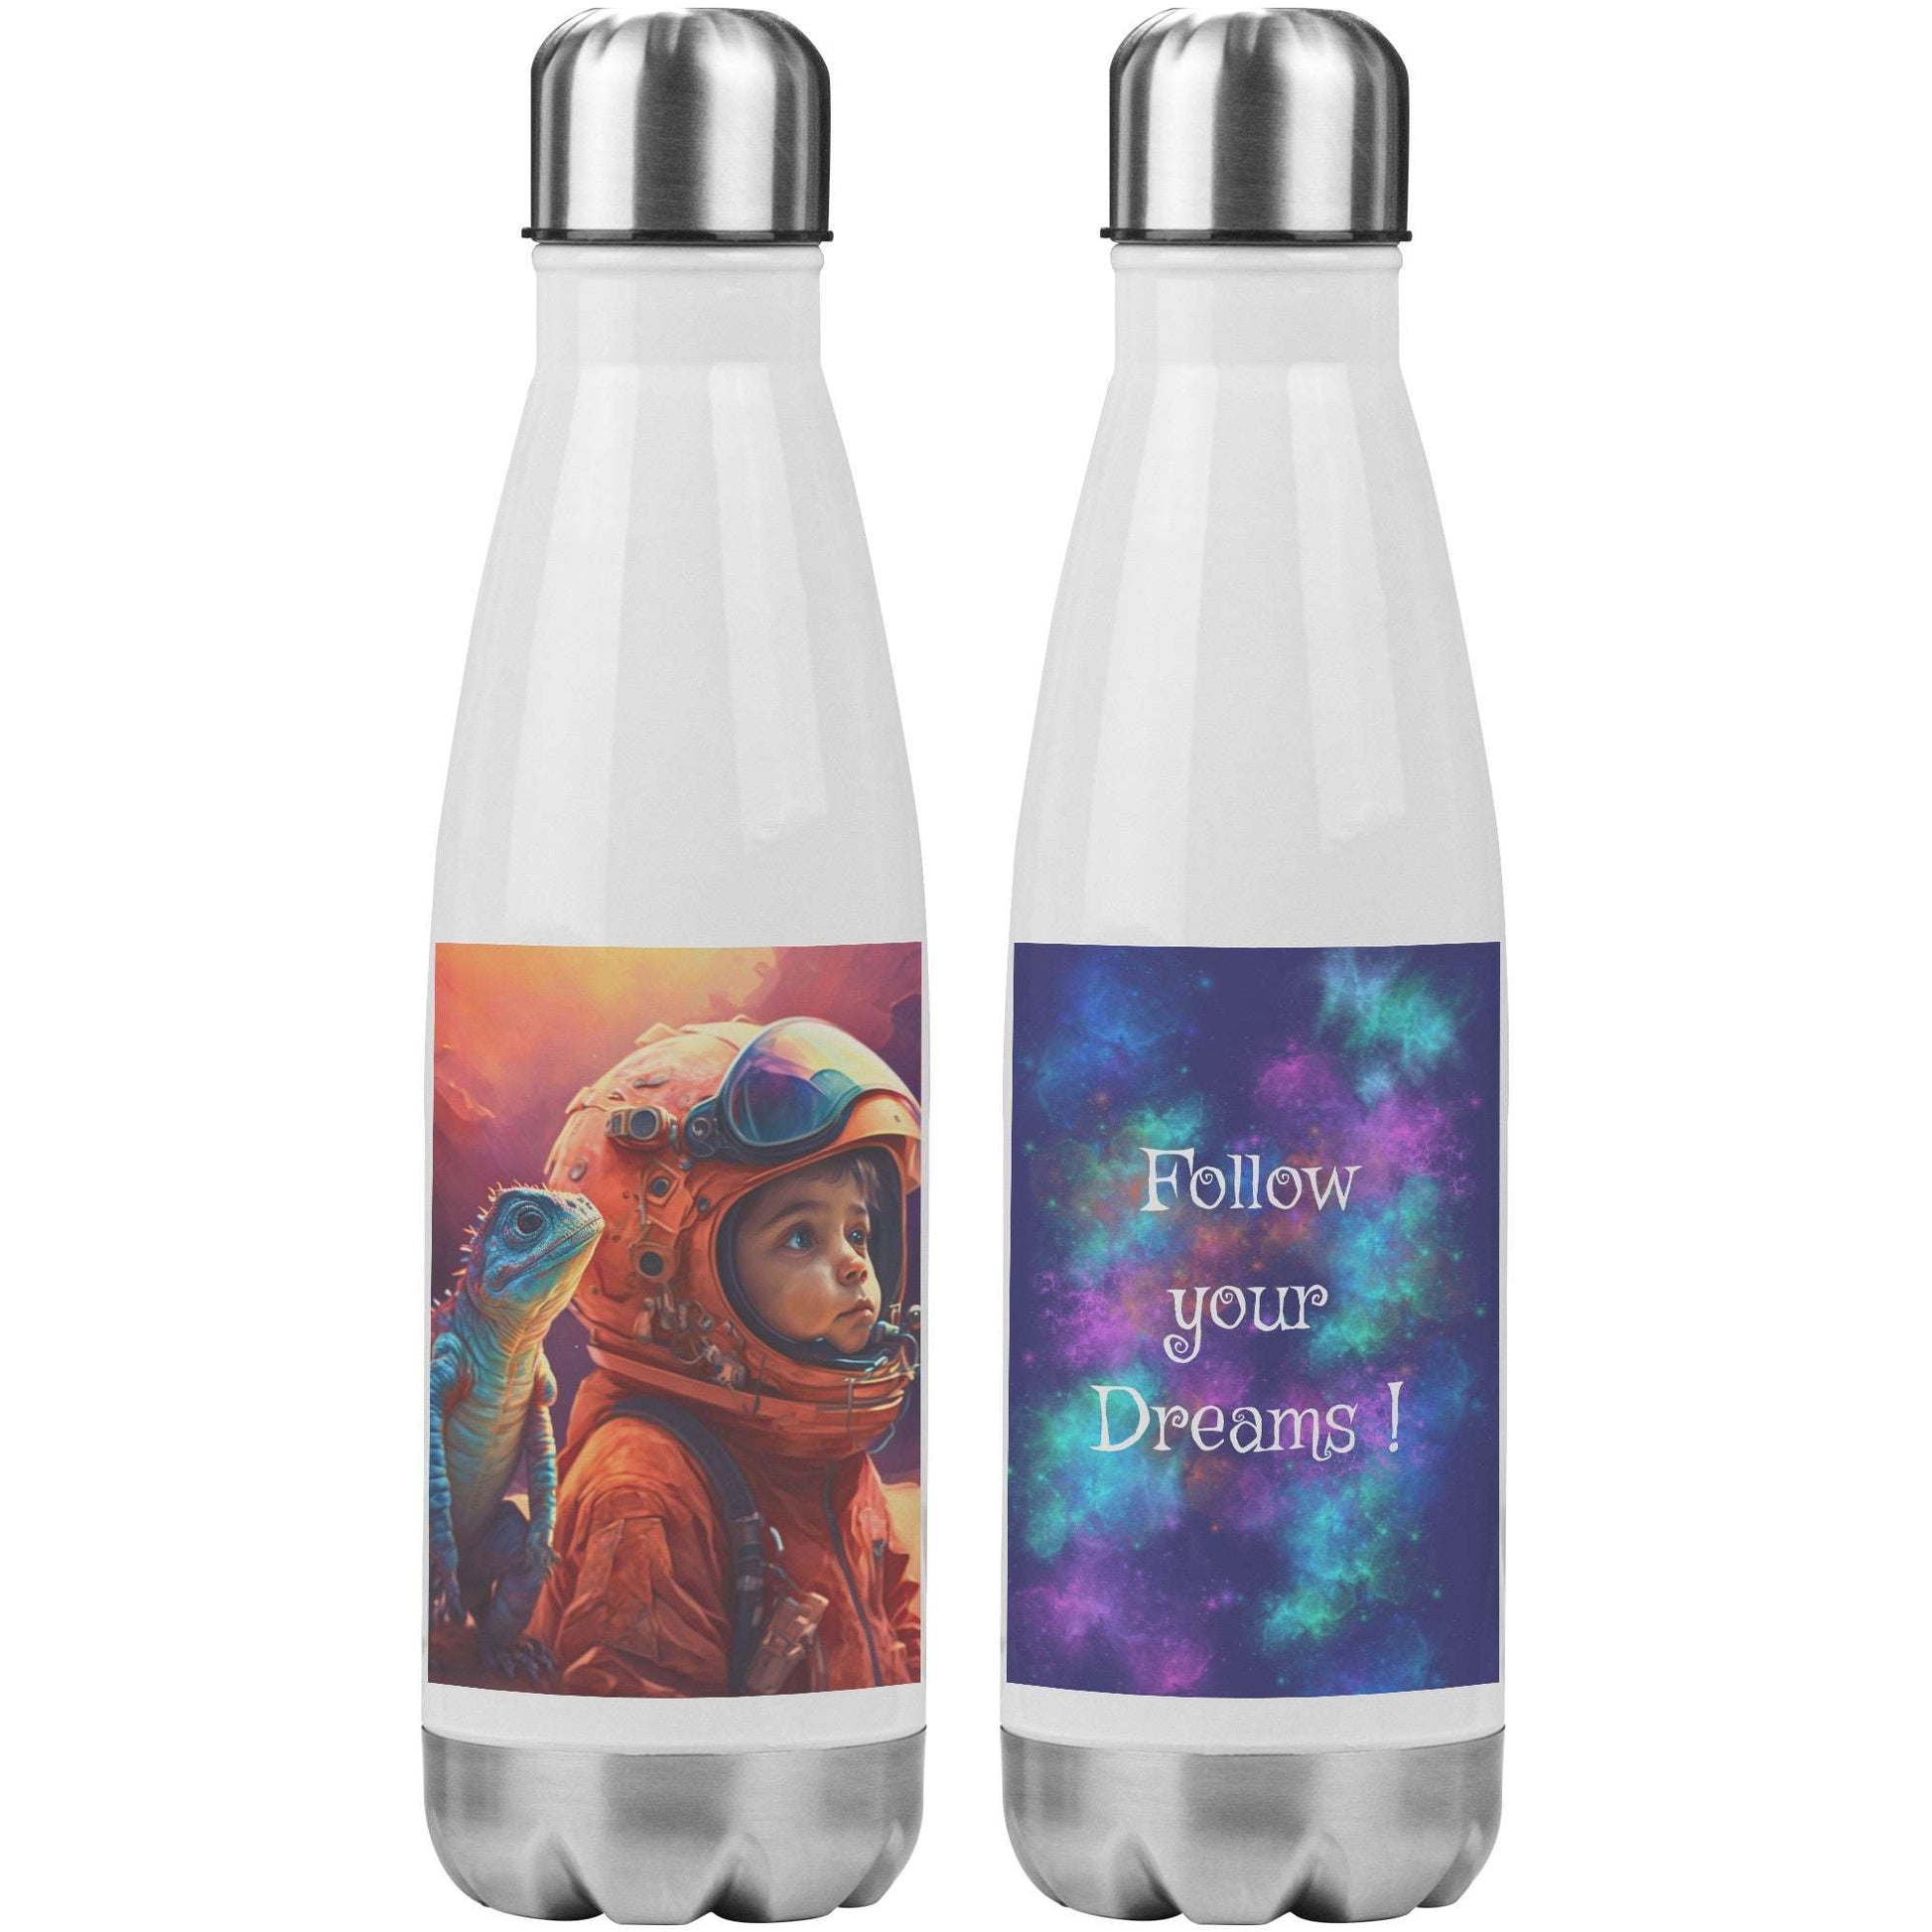 Liam's Adventures in Space - Water bottle